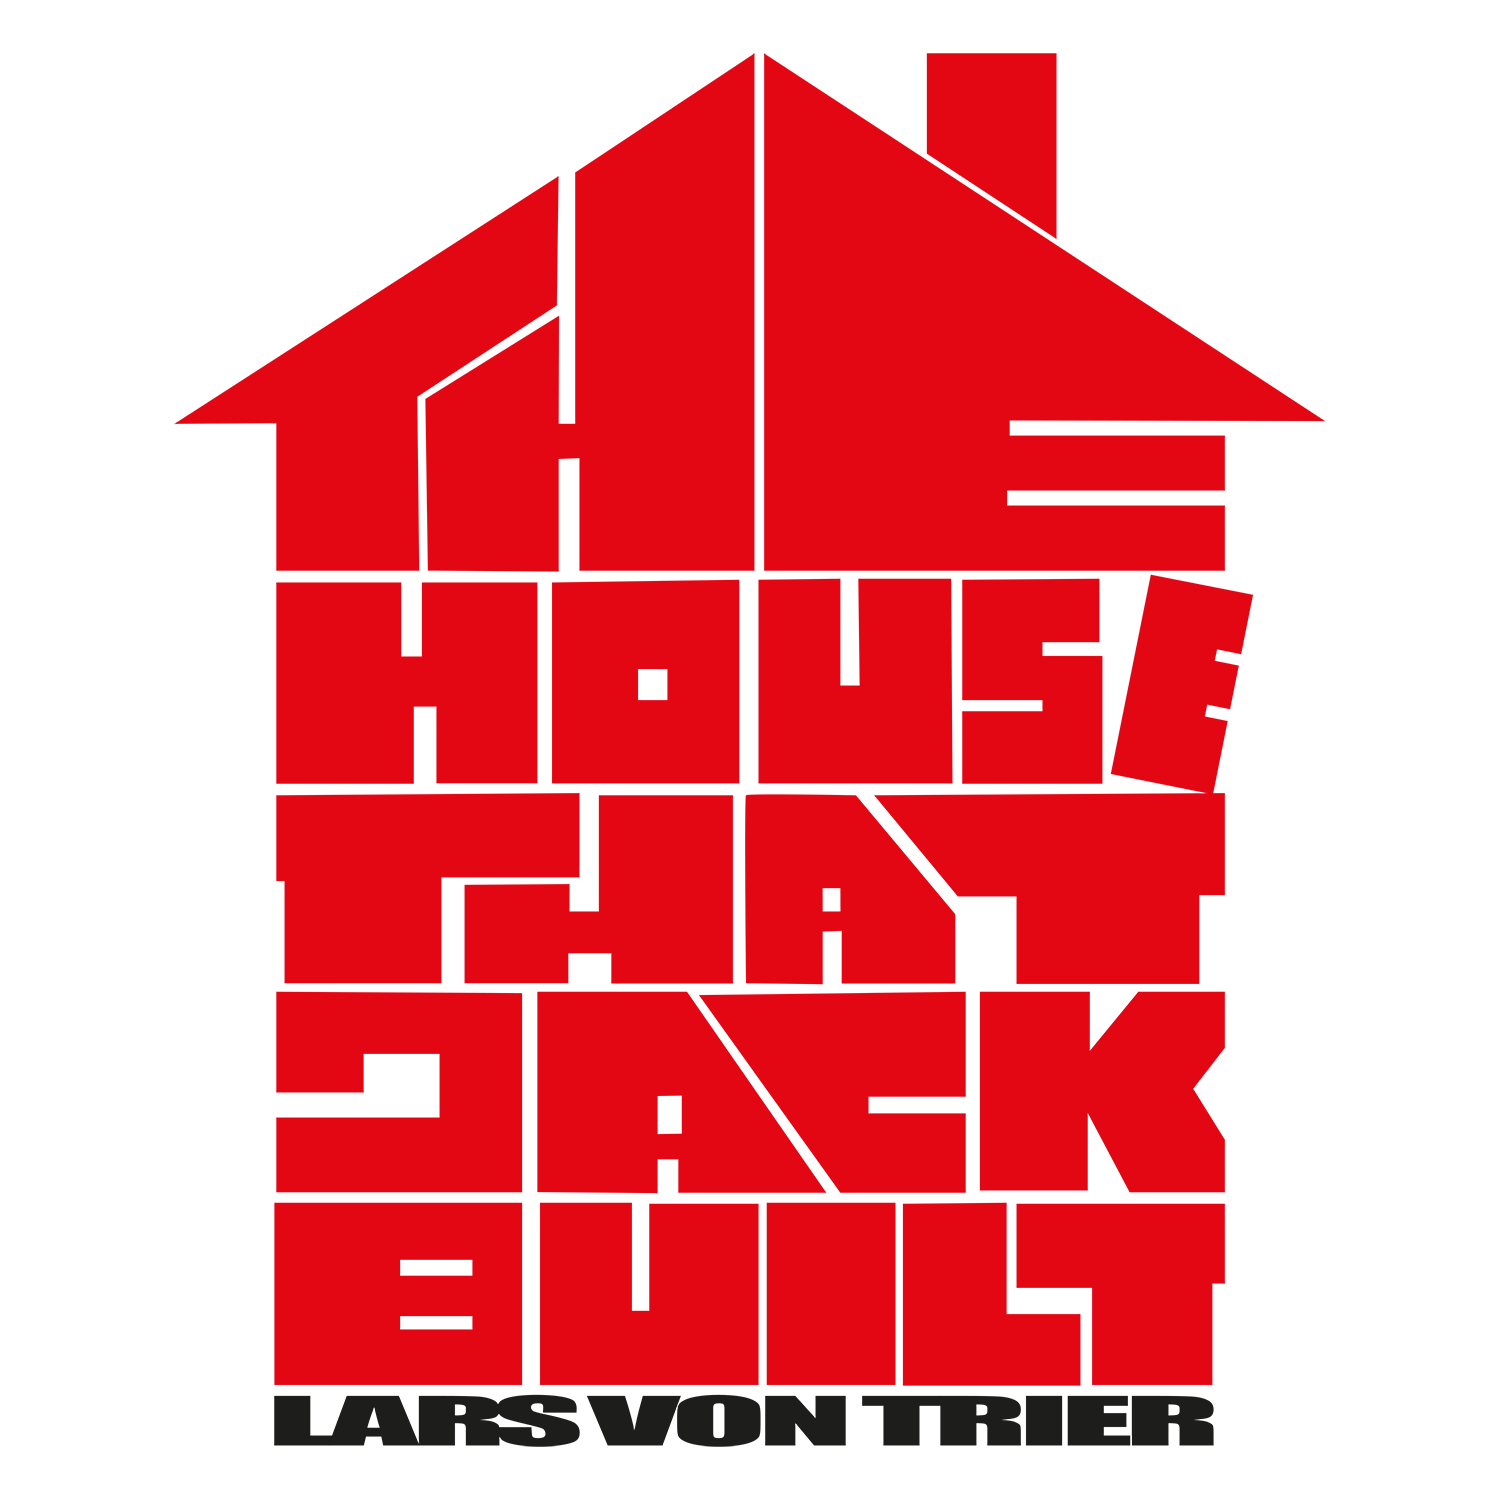 Lars von Trier's The House that Jack Built at Cannes 2018